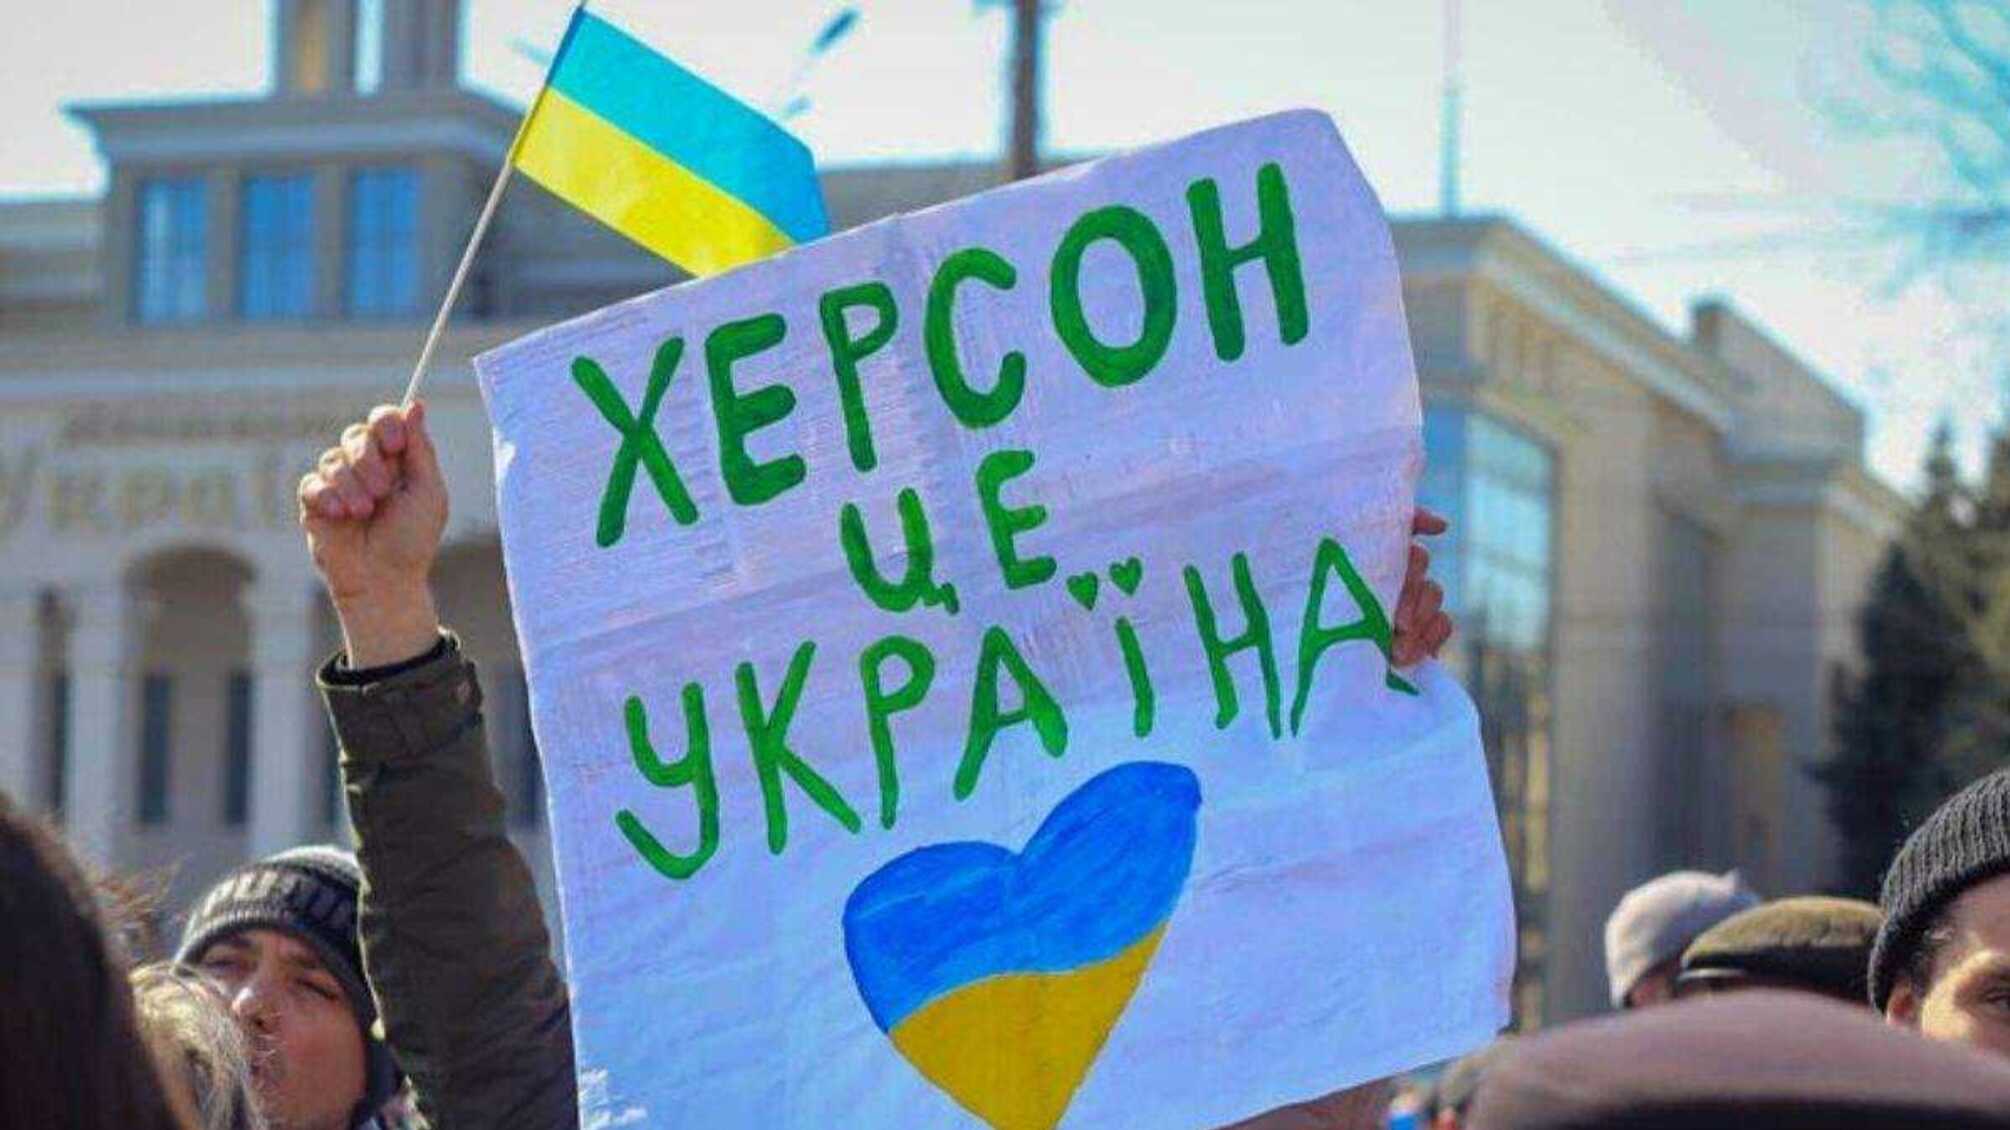 плакат Херсон це Україна